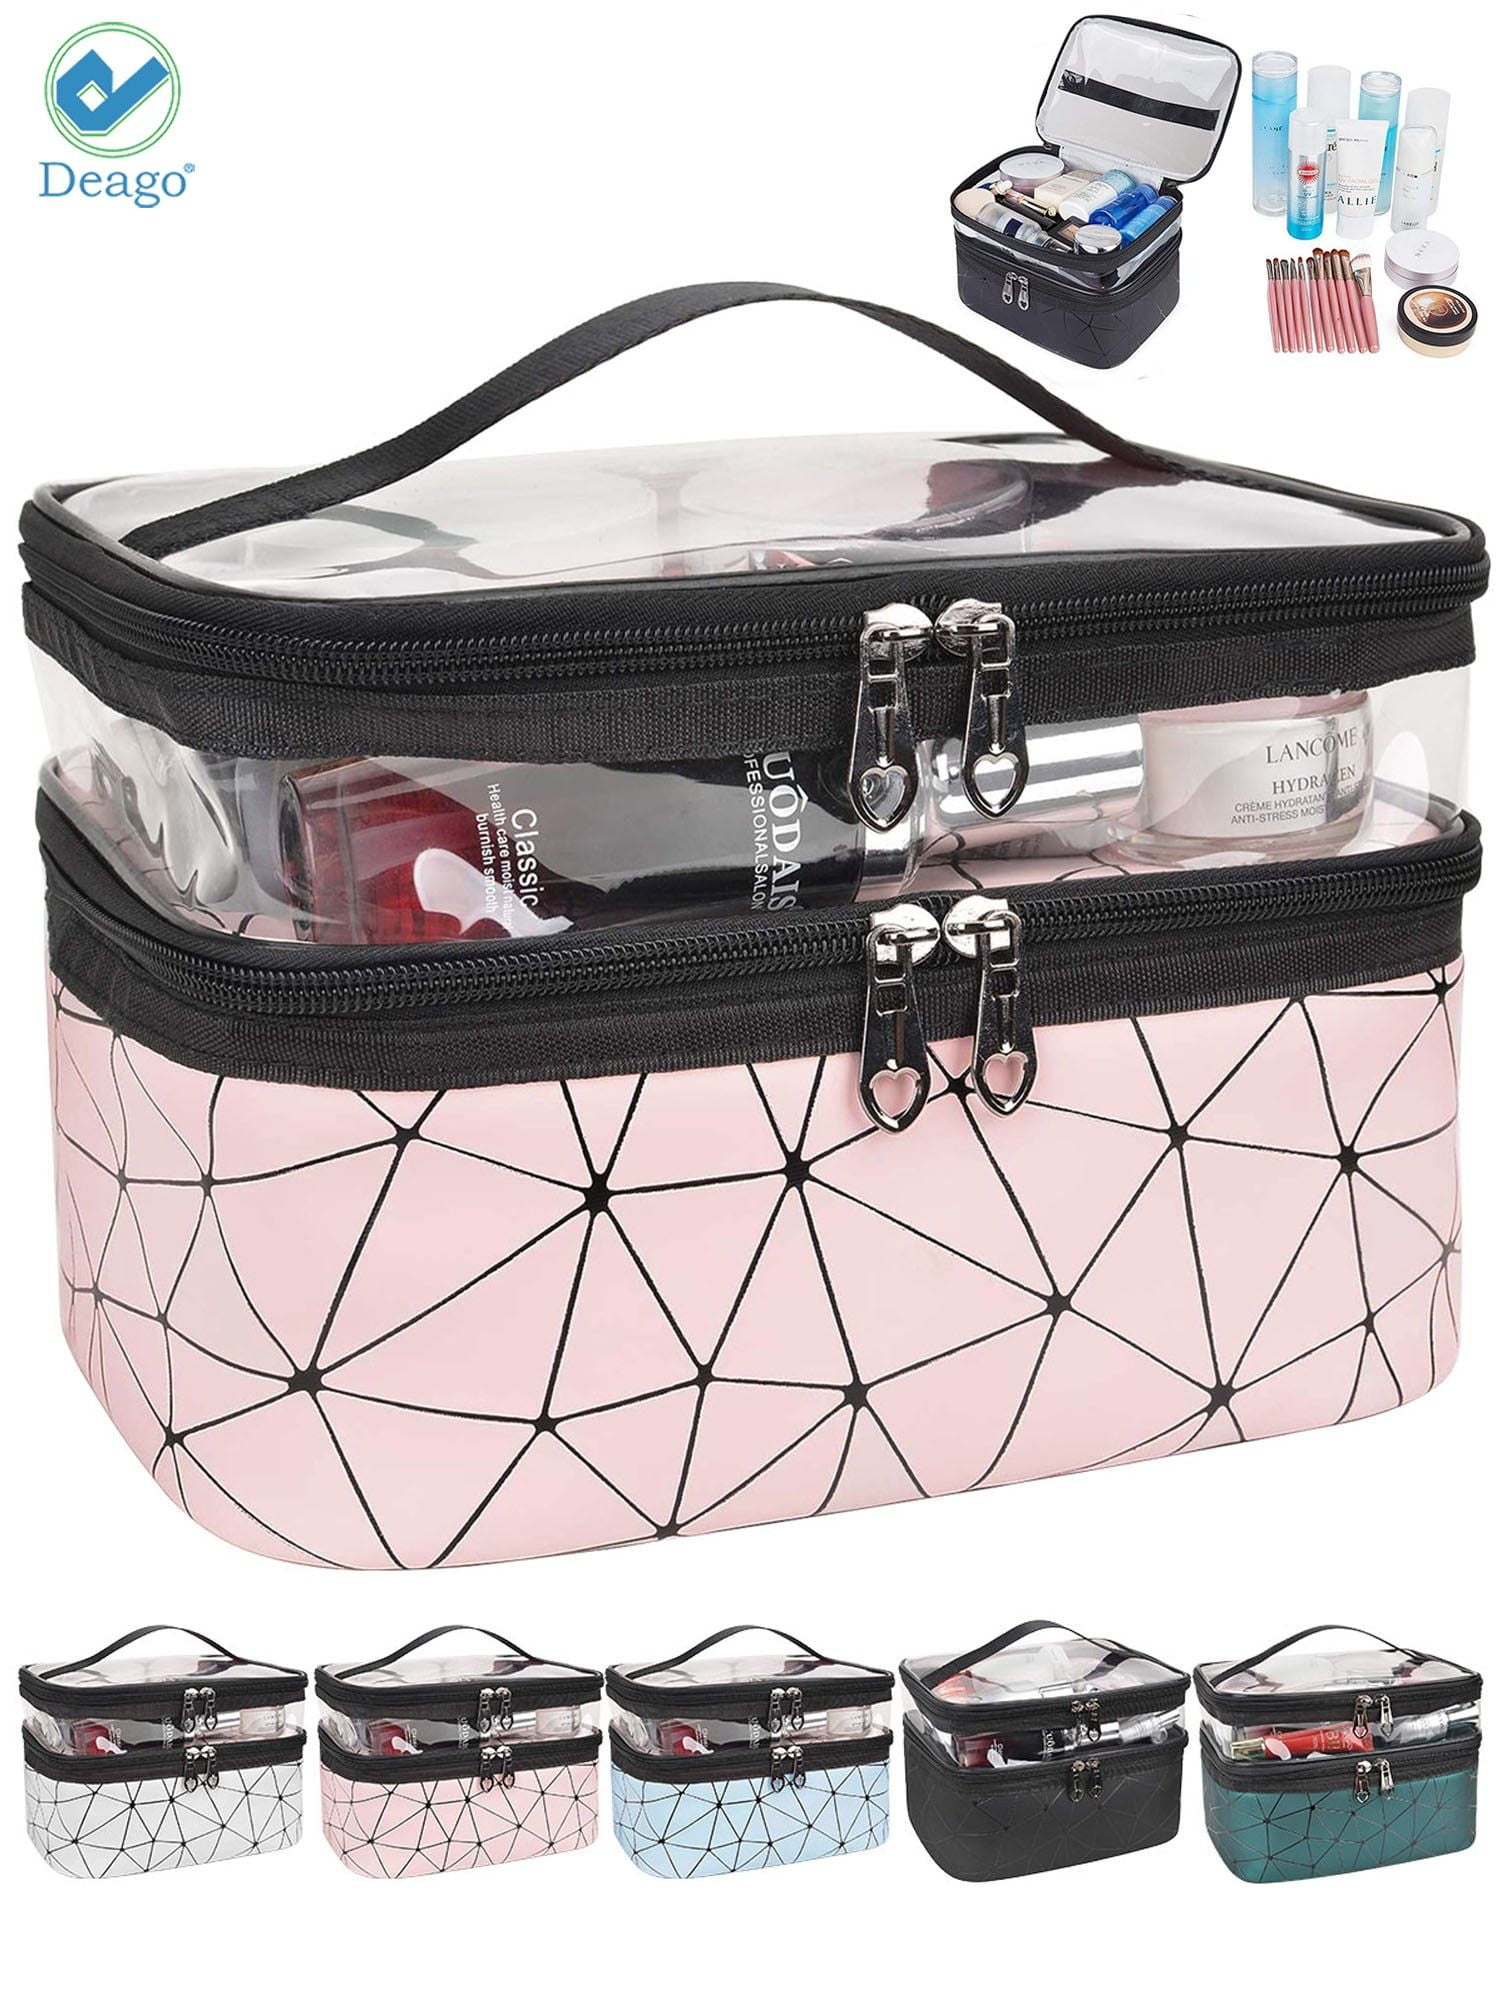  DOJUNS Cosmetic Travel Bag, Double Layer Large Makeup